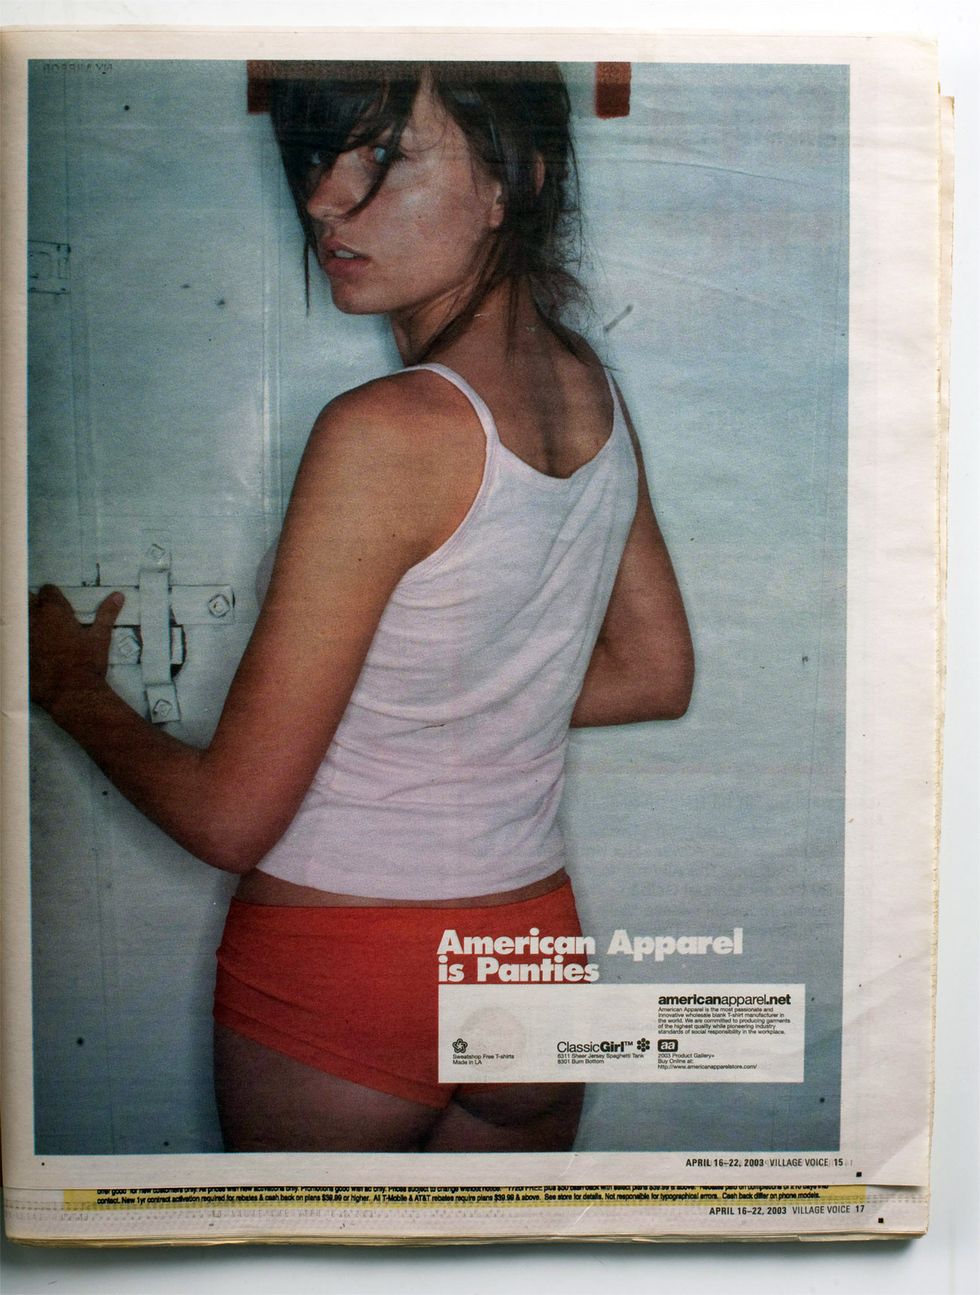 American Apparel advertisement archive